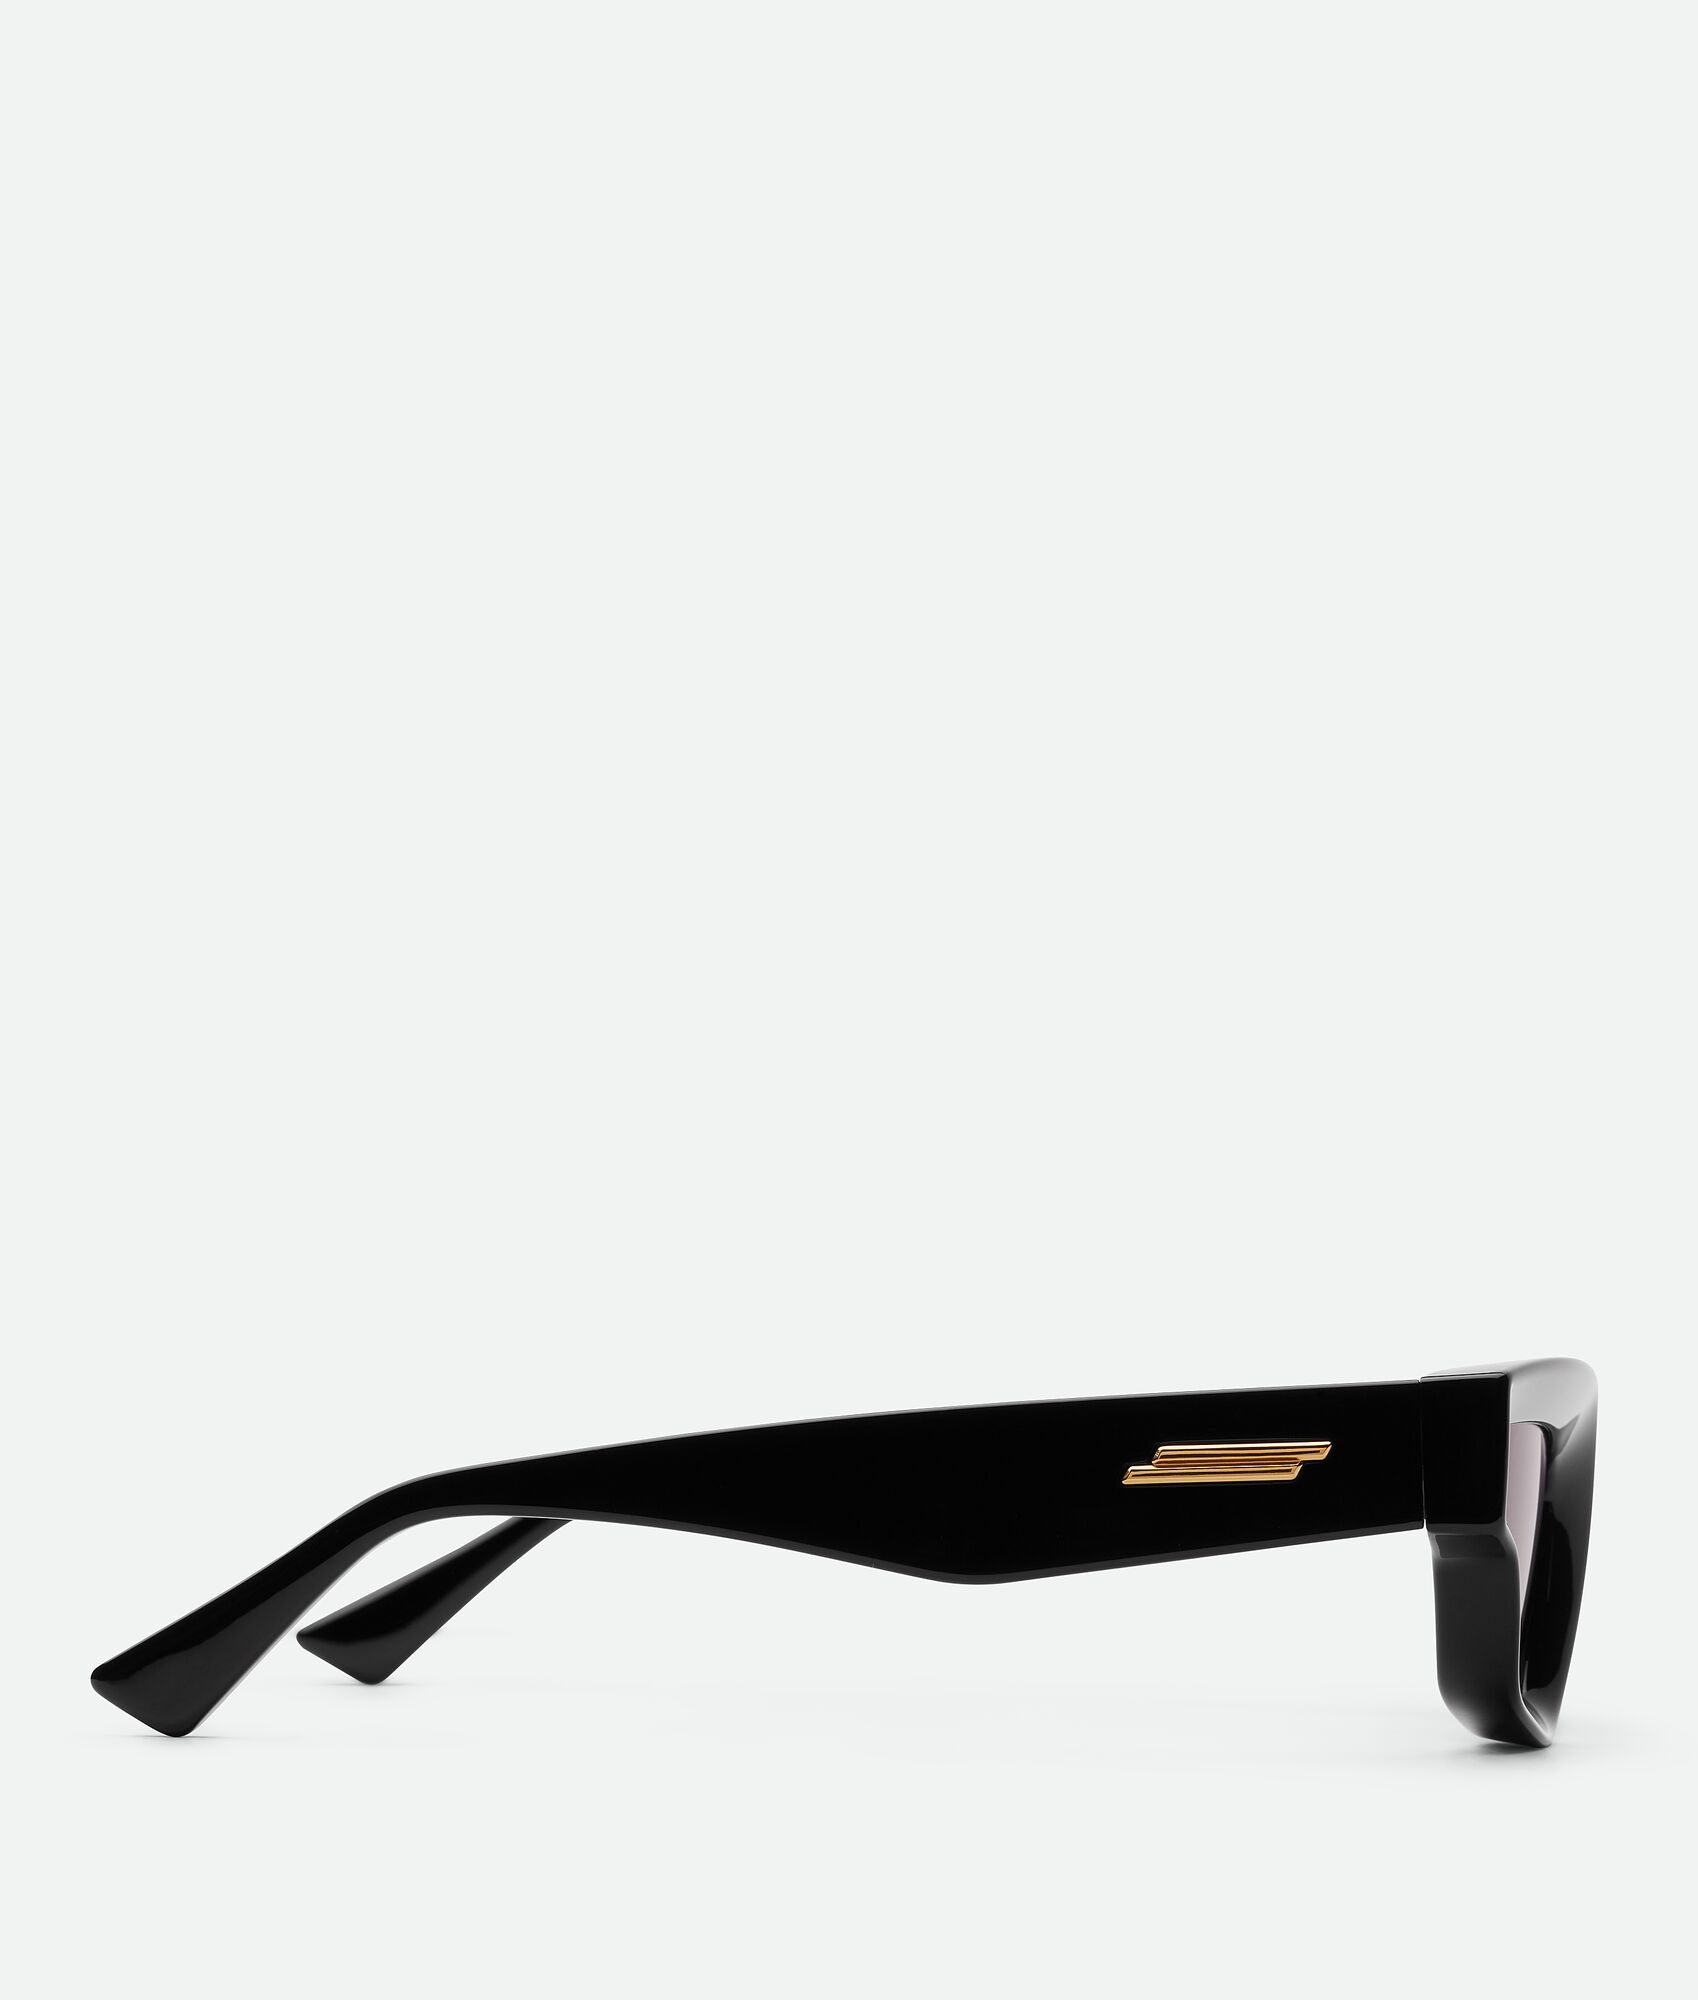 Bottega Veneta Black Sharp Cat-Eye Sunglasses